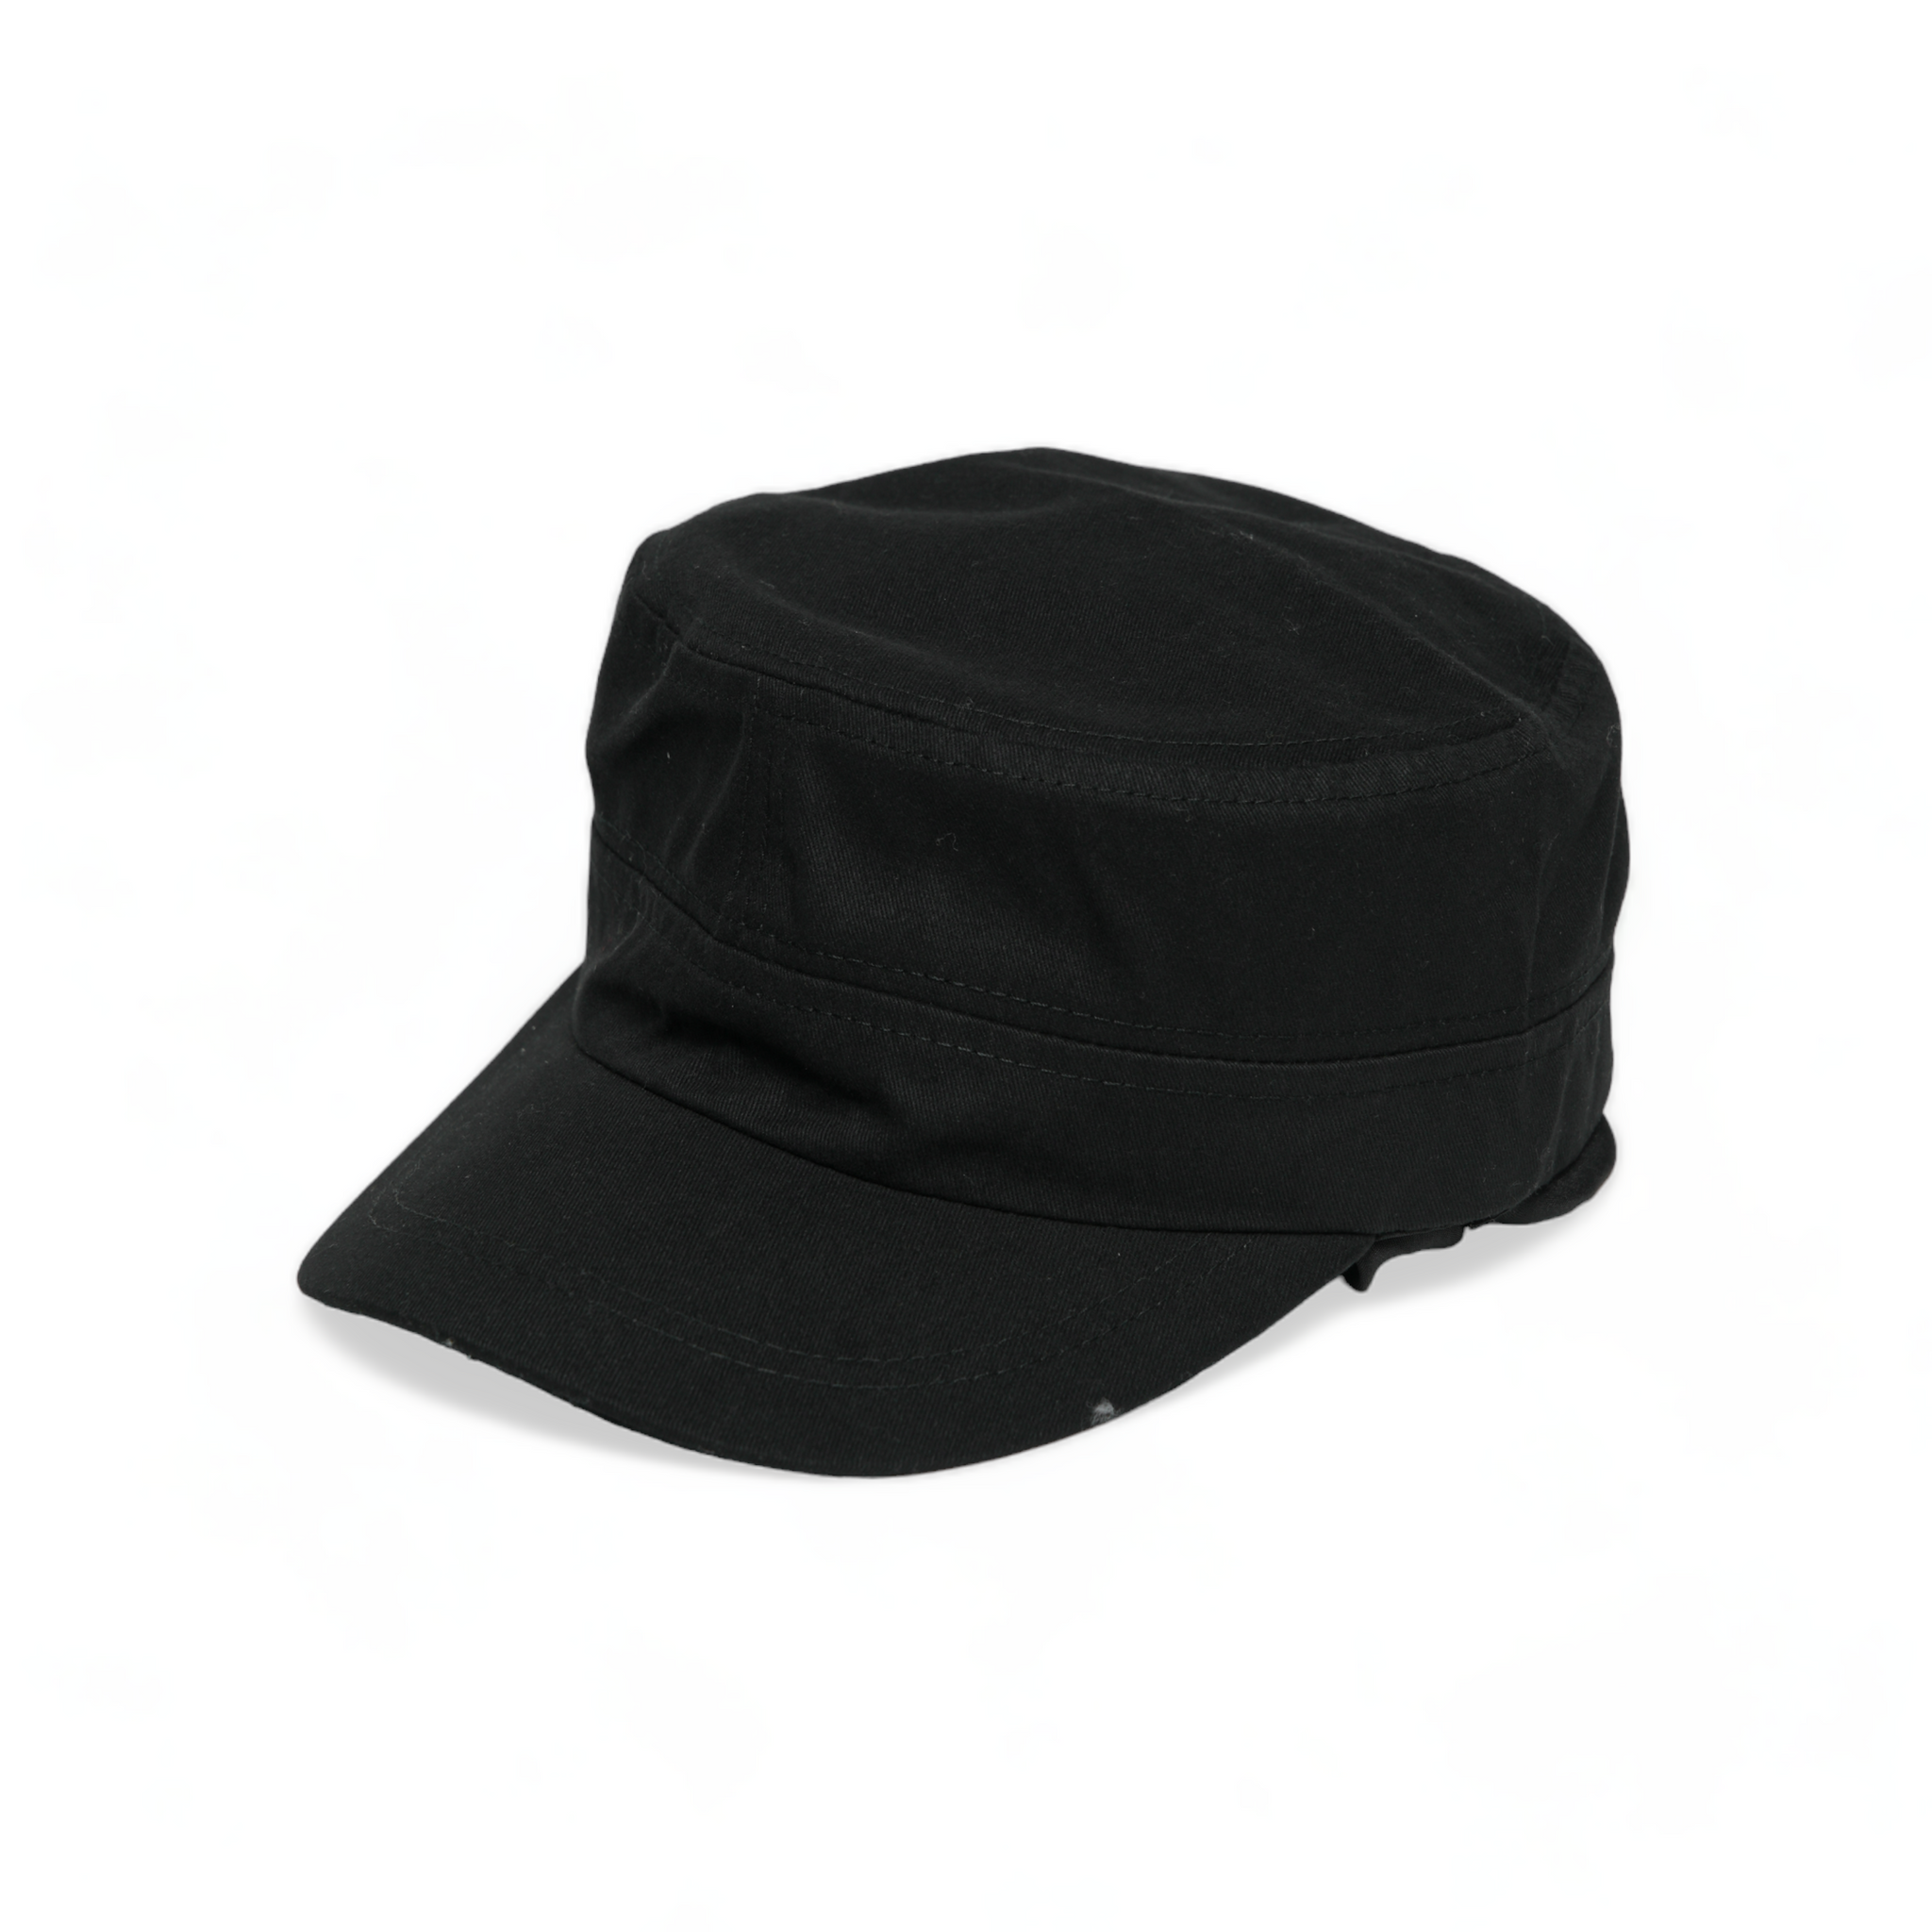 Chokore Flat Top Cotton Cap (Black)